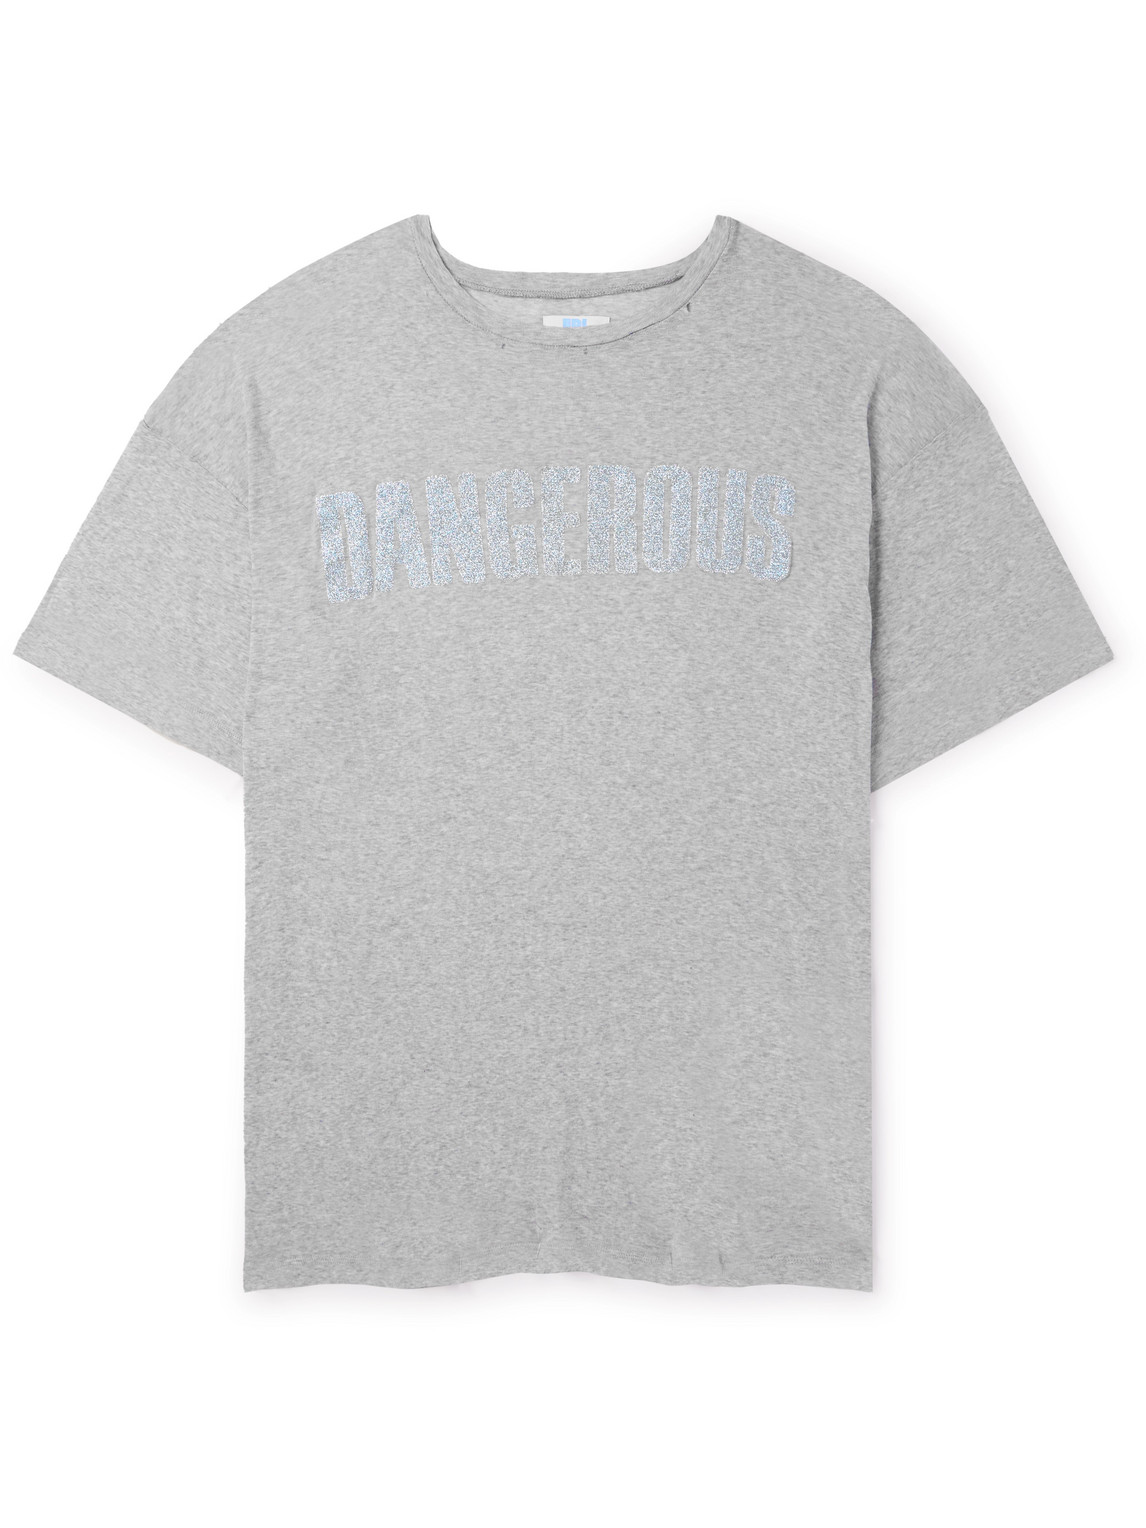 ERL - Distressed Printed Cotton-Jersey T-Shirt - Men - Gray - L von ERL